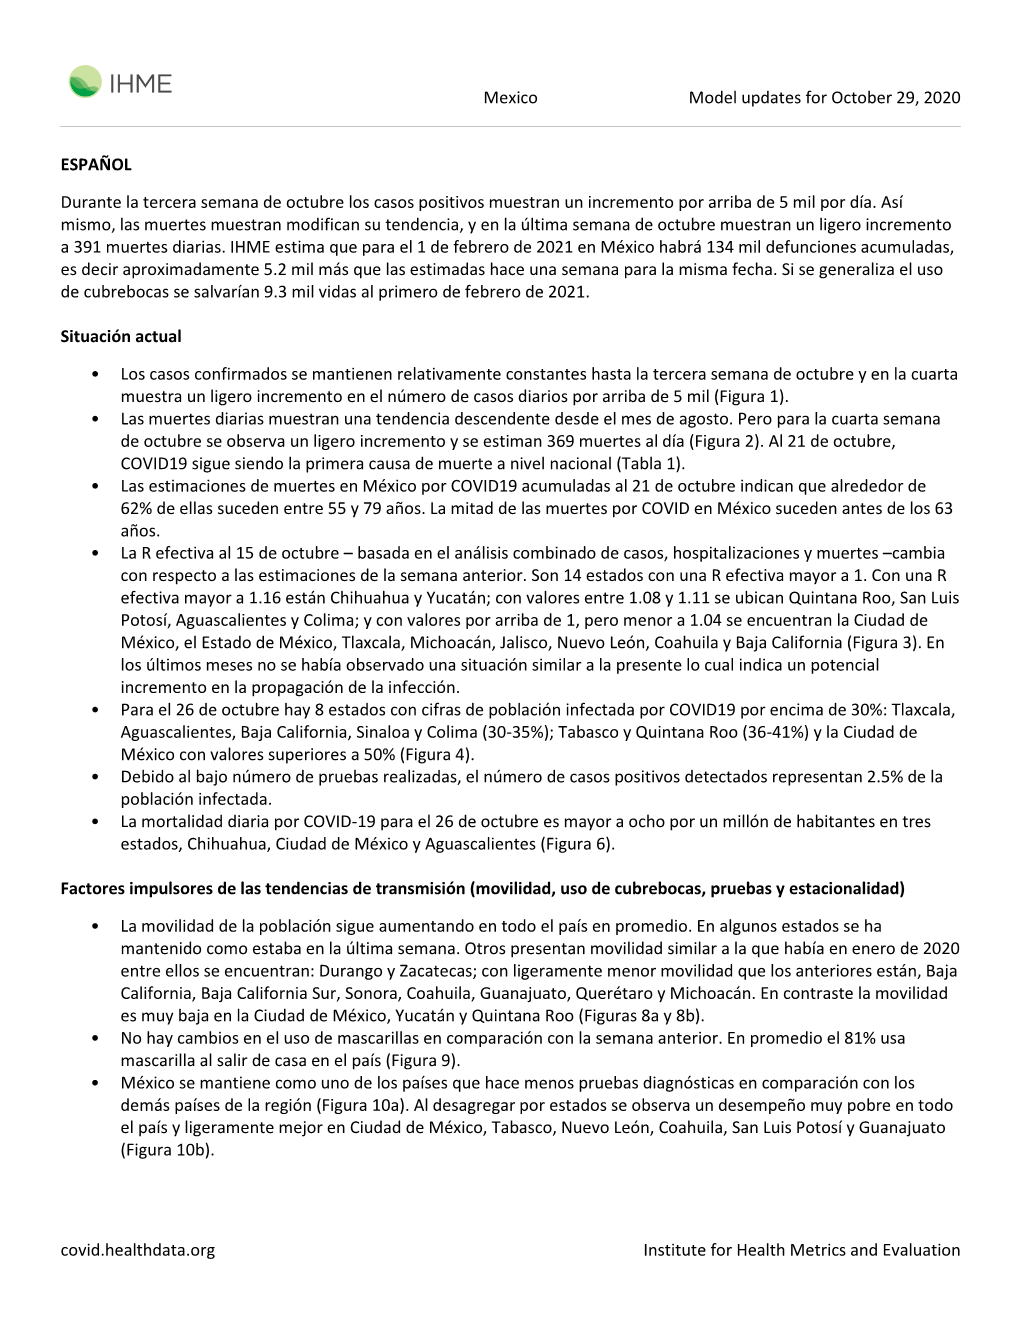 Mexico Model Updates for October 29, 2020 Covid.Healthdata.Org Institute